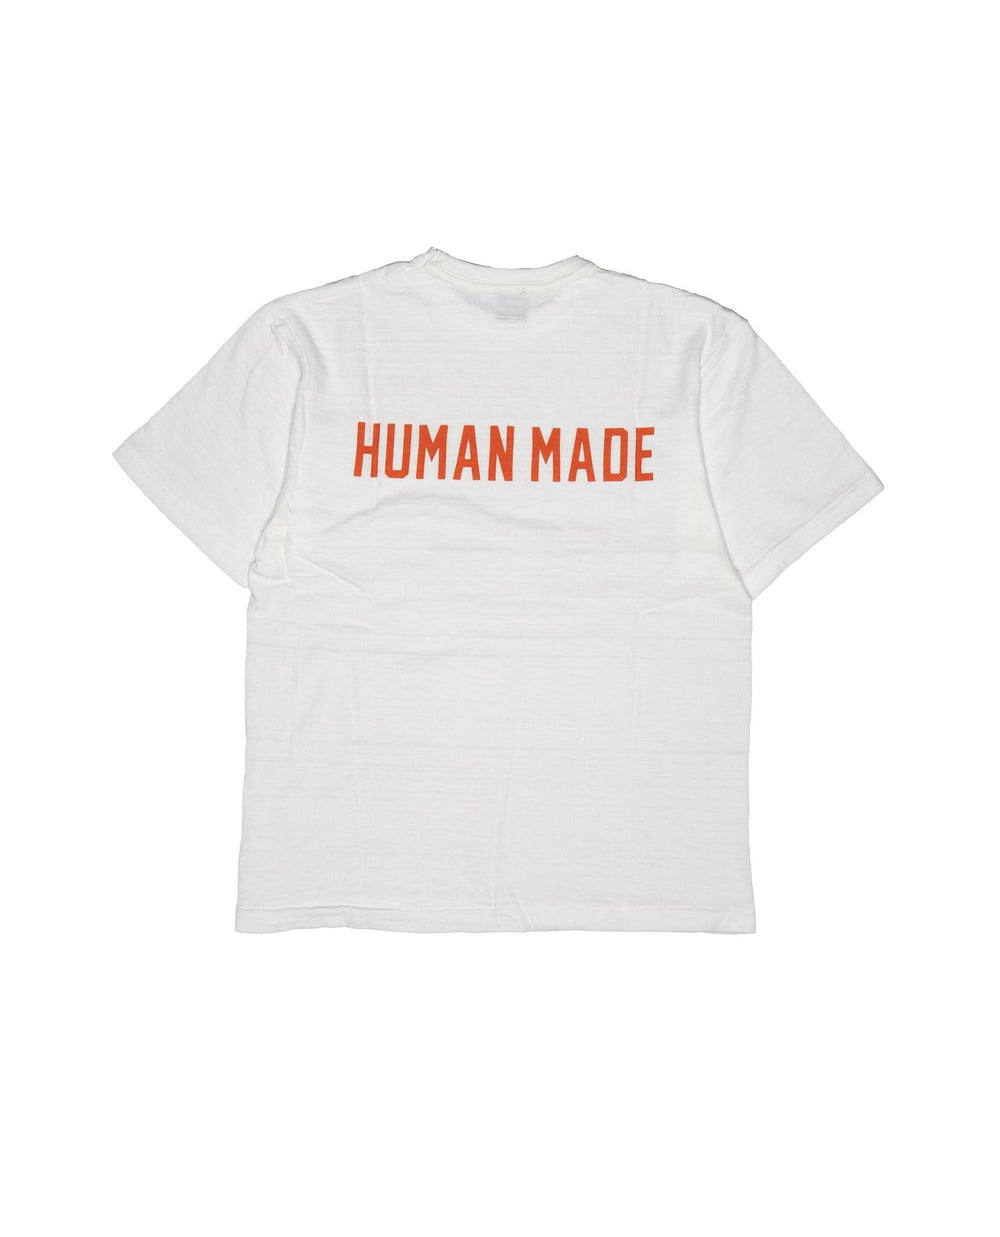 Human Made T-Shirt #04 | STASHED